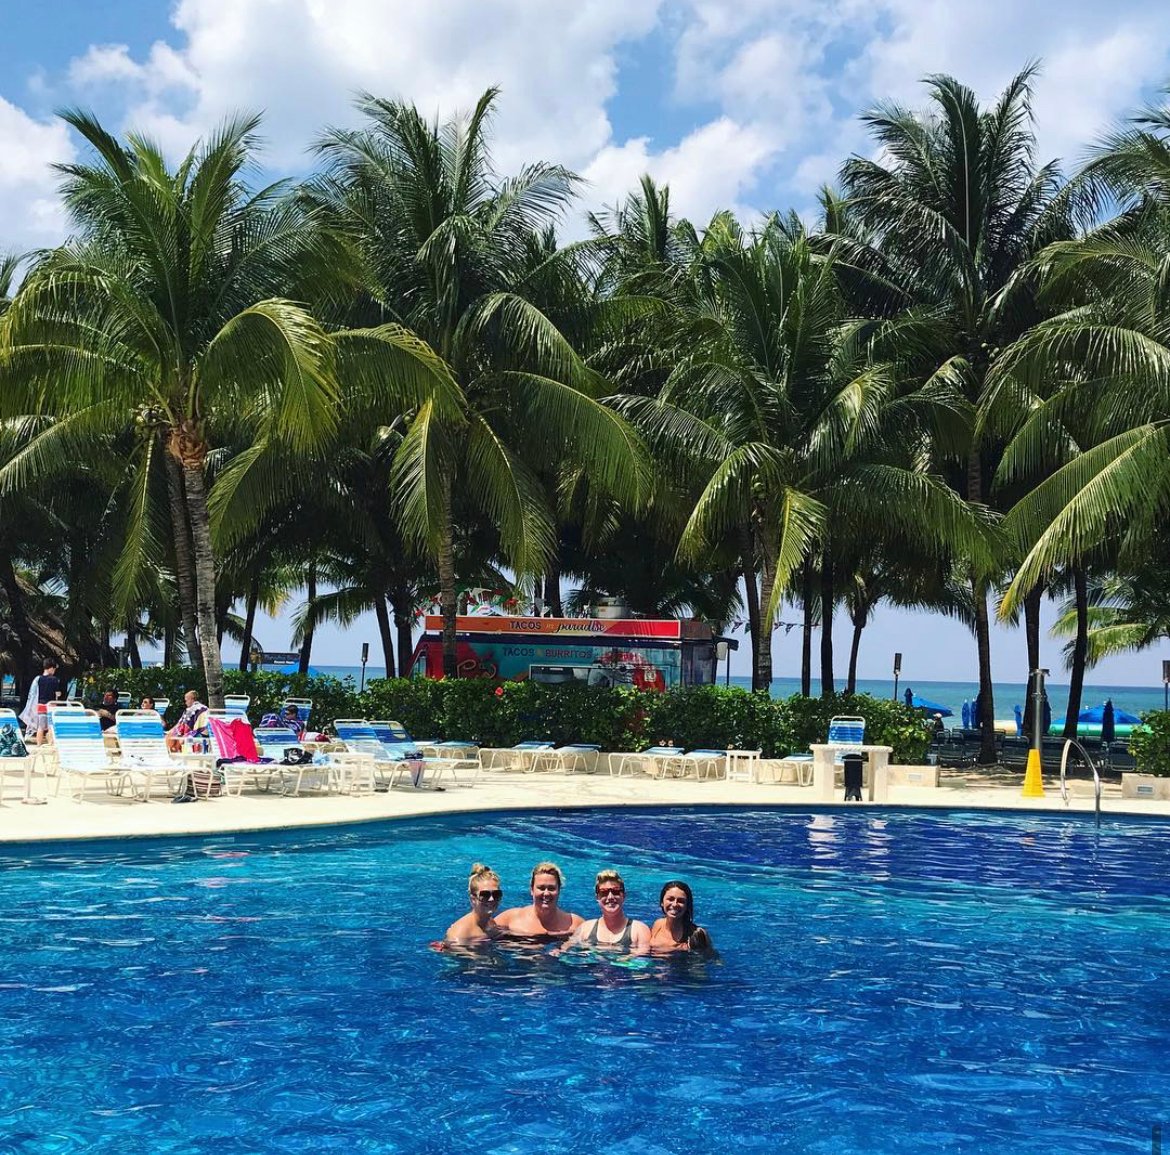 Paradie Resort, Cozumel, Mexico